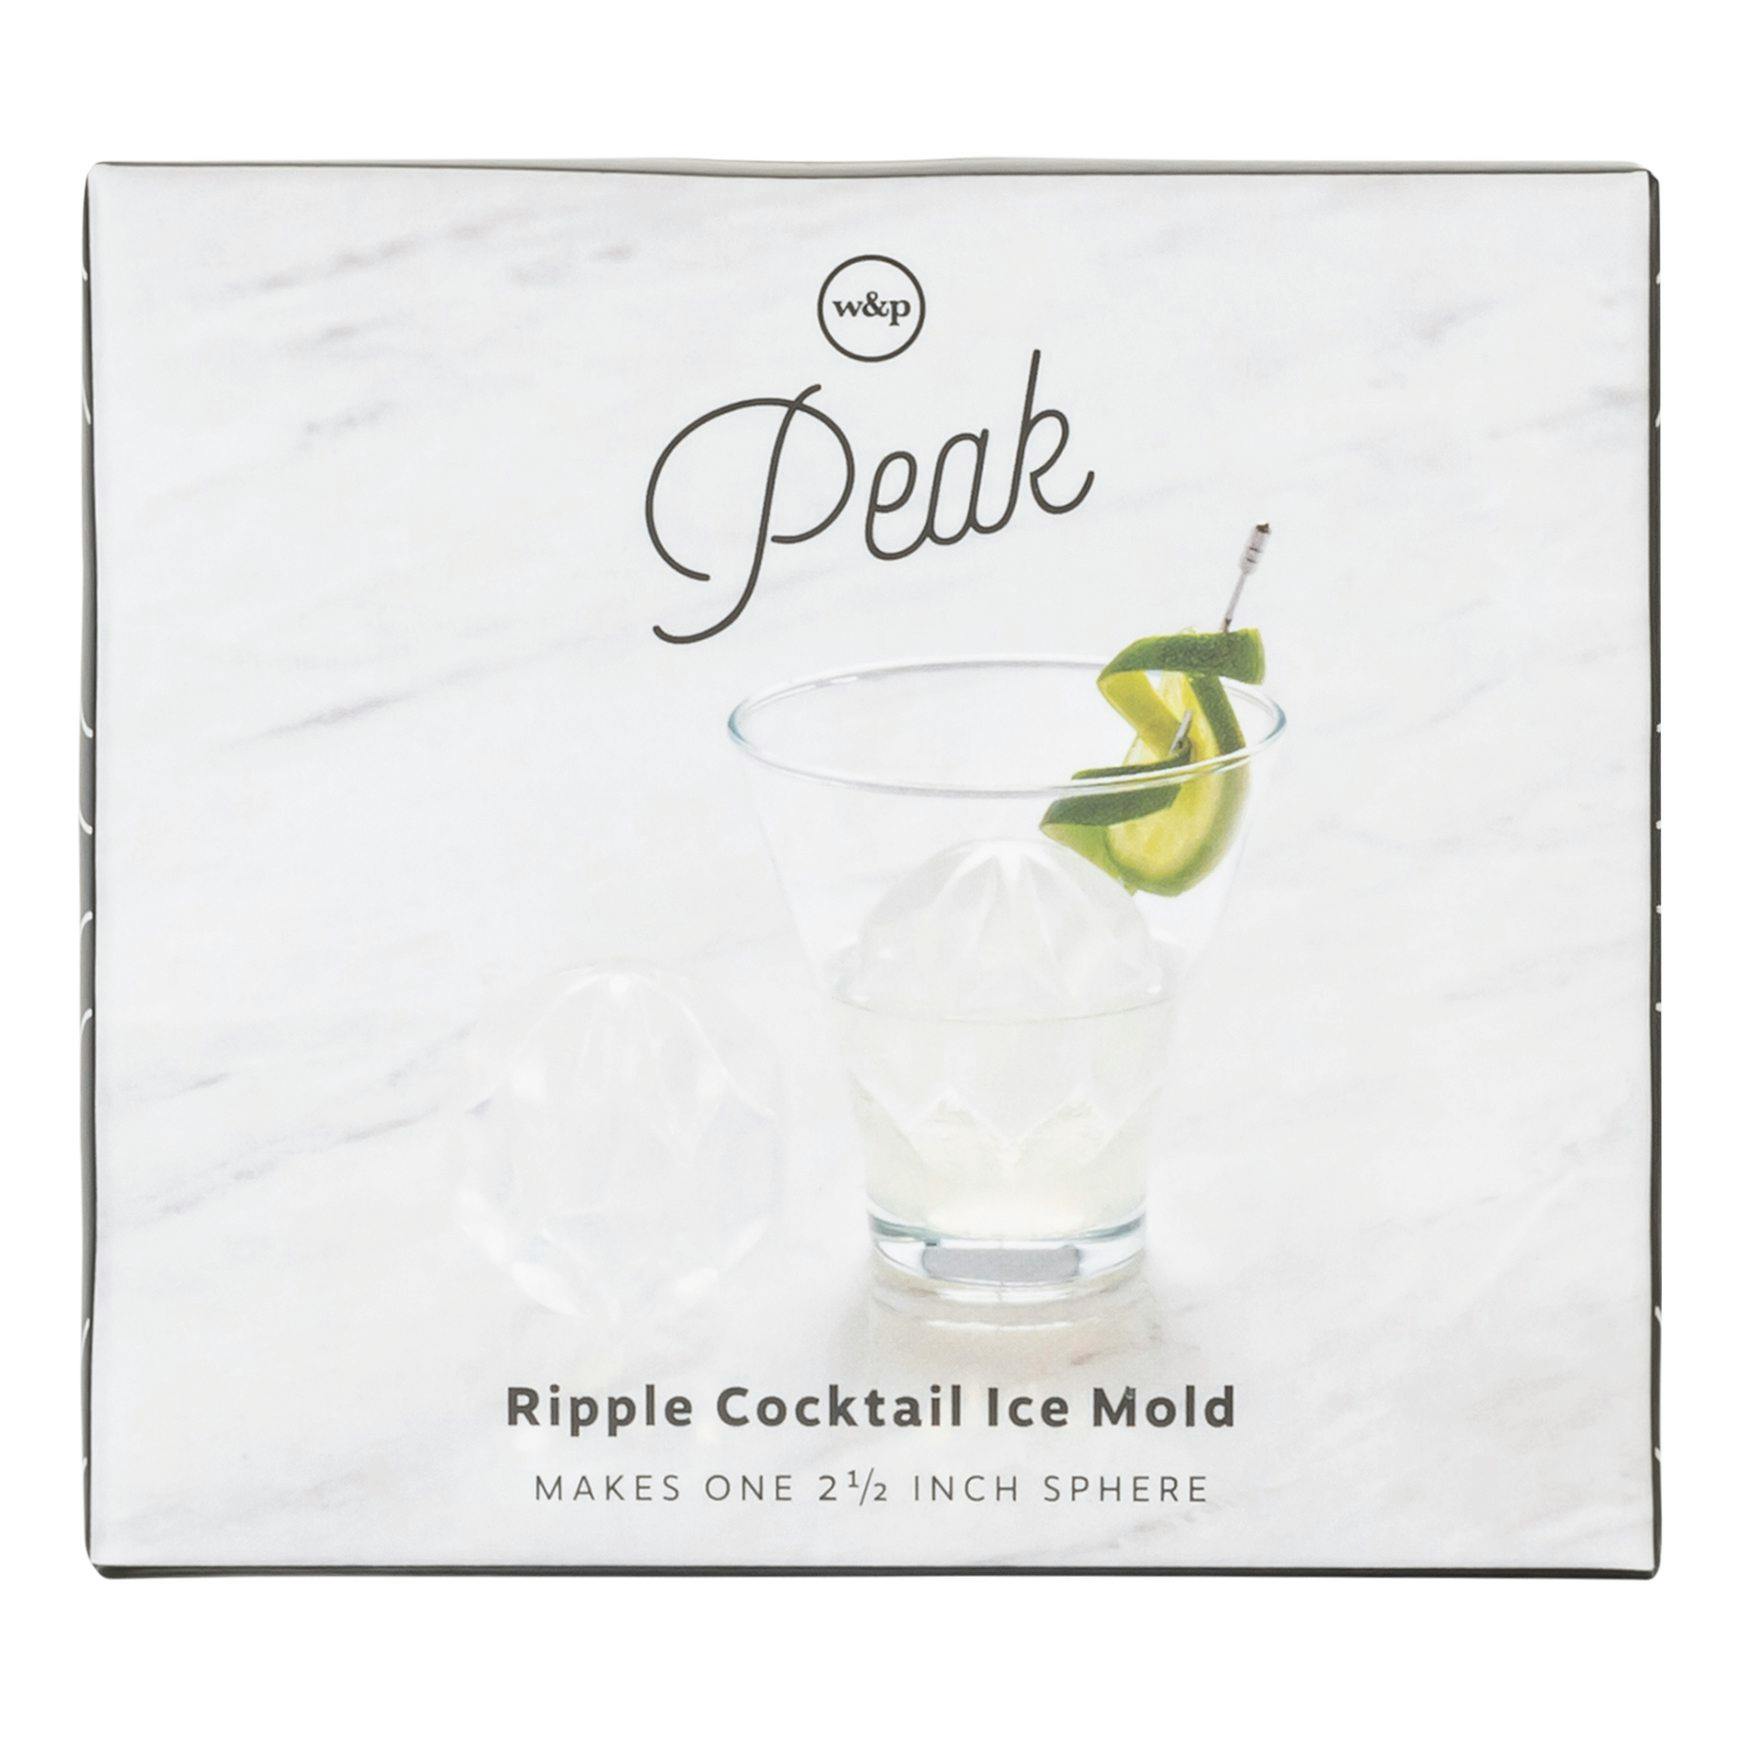 W&P Peak Ripple Cocktail ice Mold